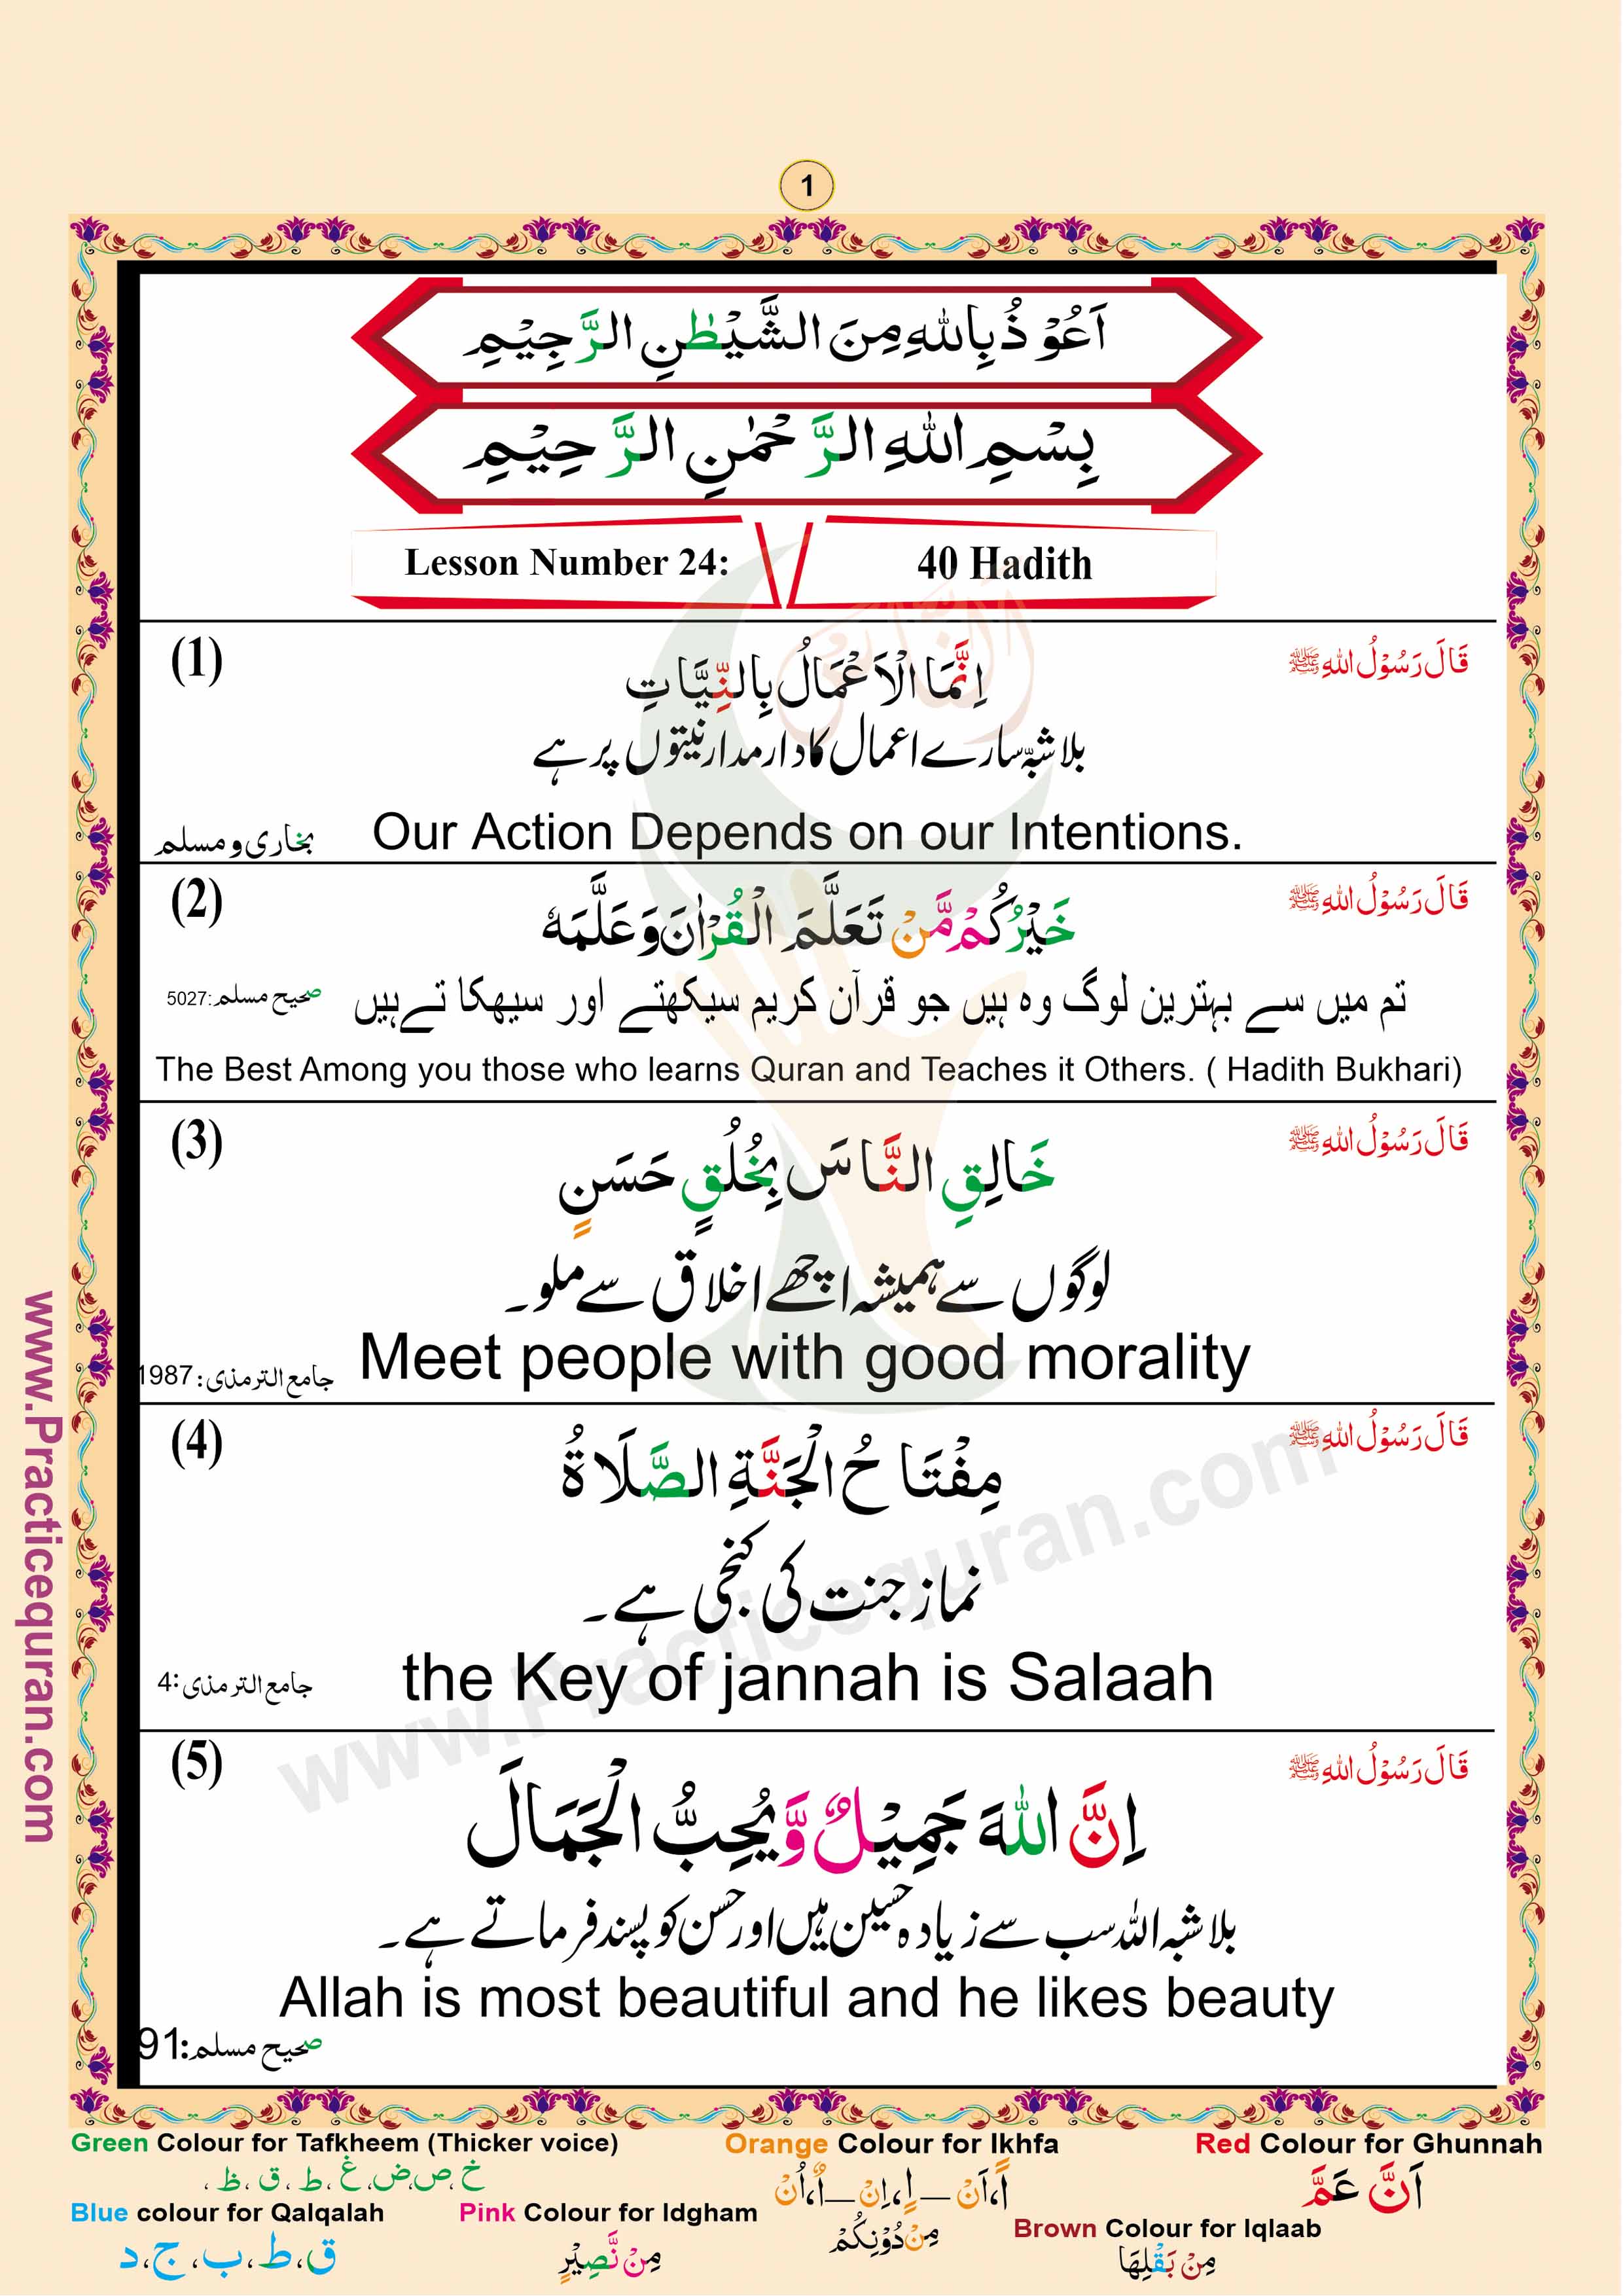 Read Forty Hadith Page No 1, Practice Quran